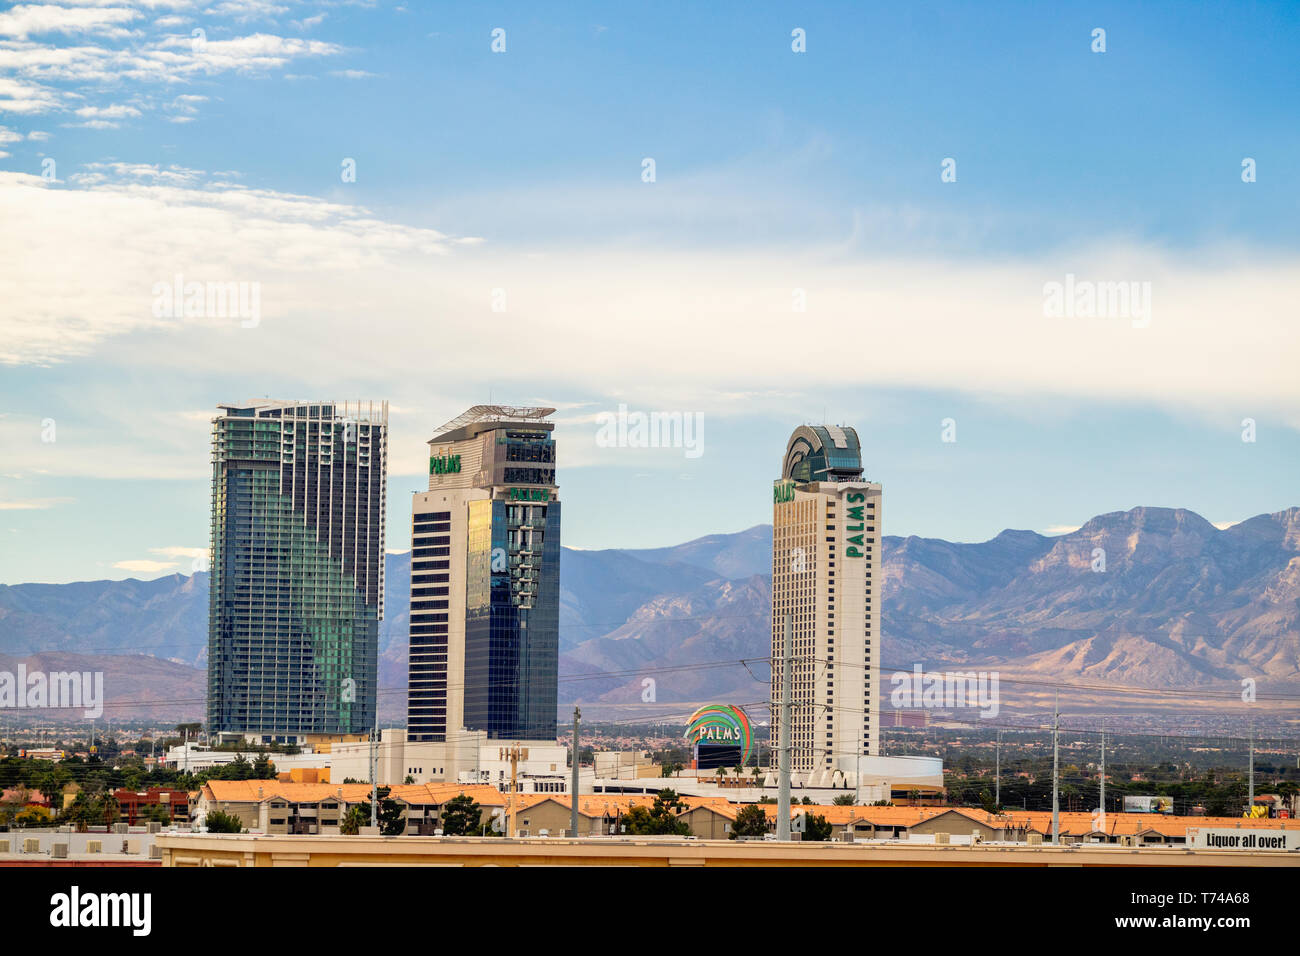 Palms Casino Resort,Beautiful Mountains in Background. Las Vegas, Nevada, USA, November 19, 2016 Stock Photo